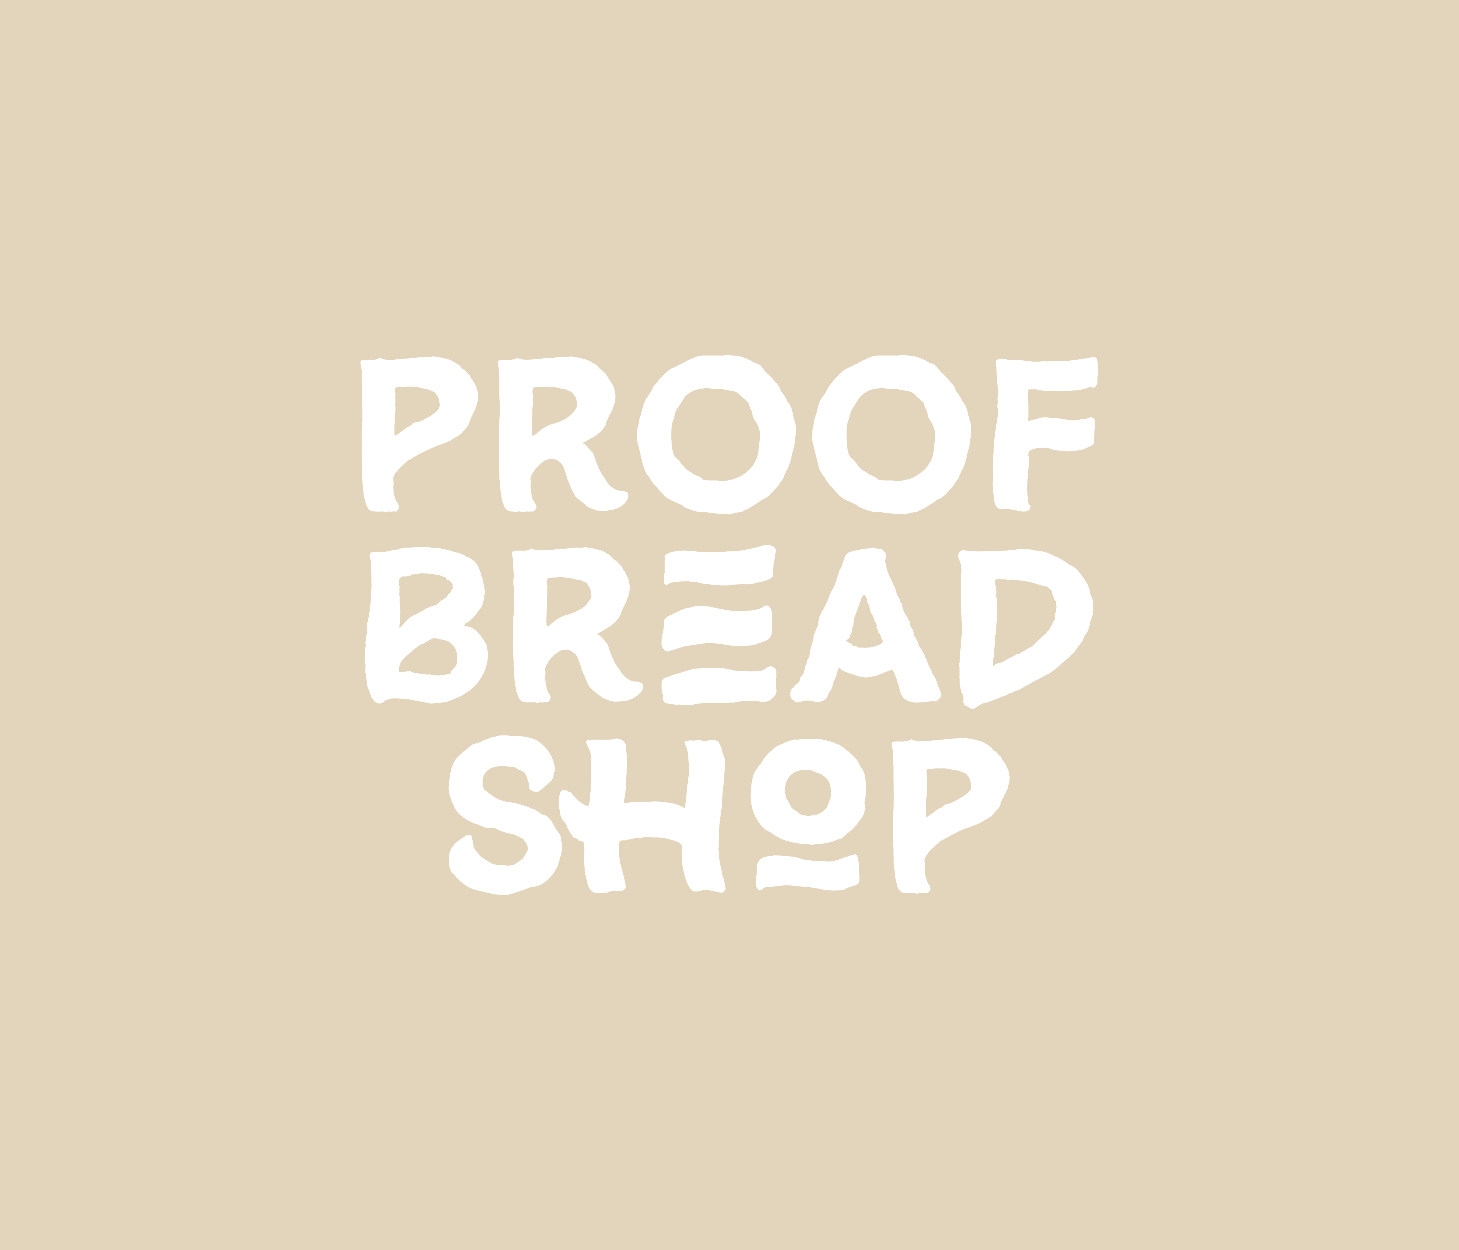 Proof Bread Shop Th